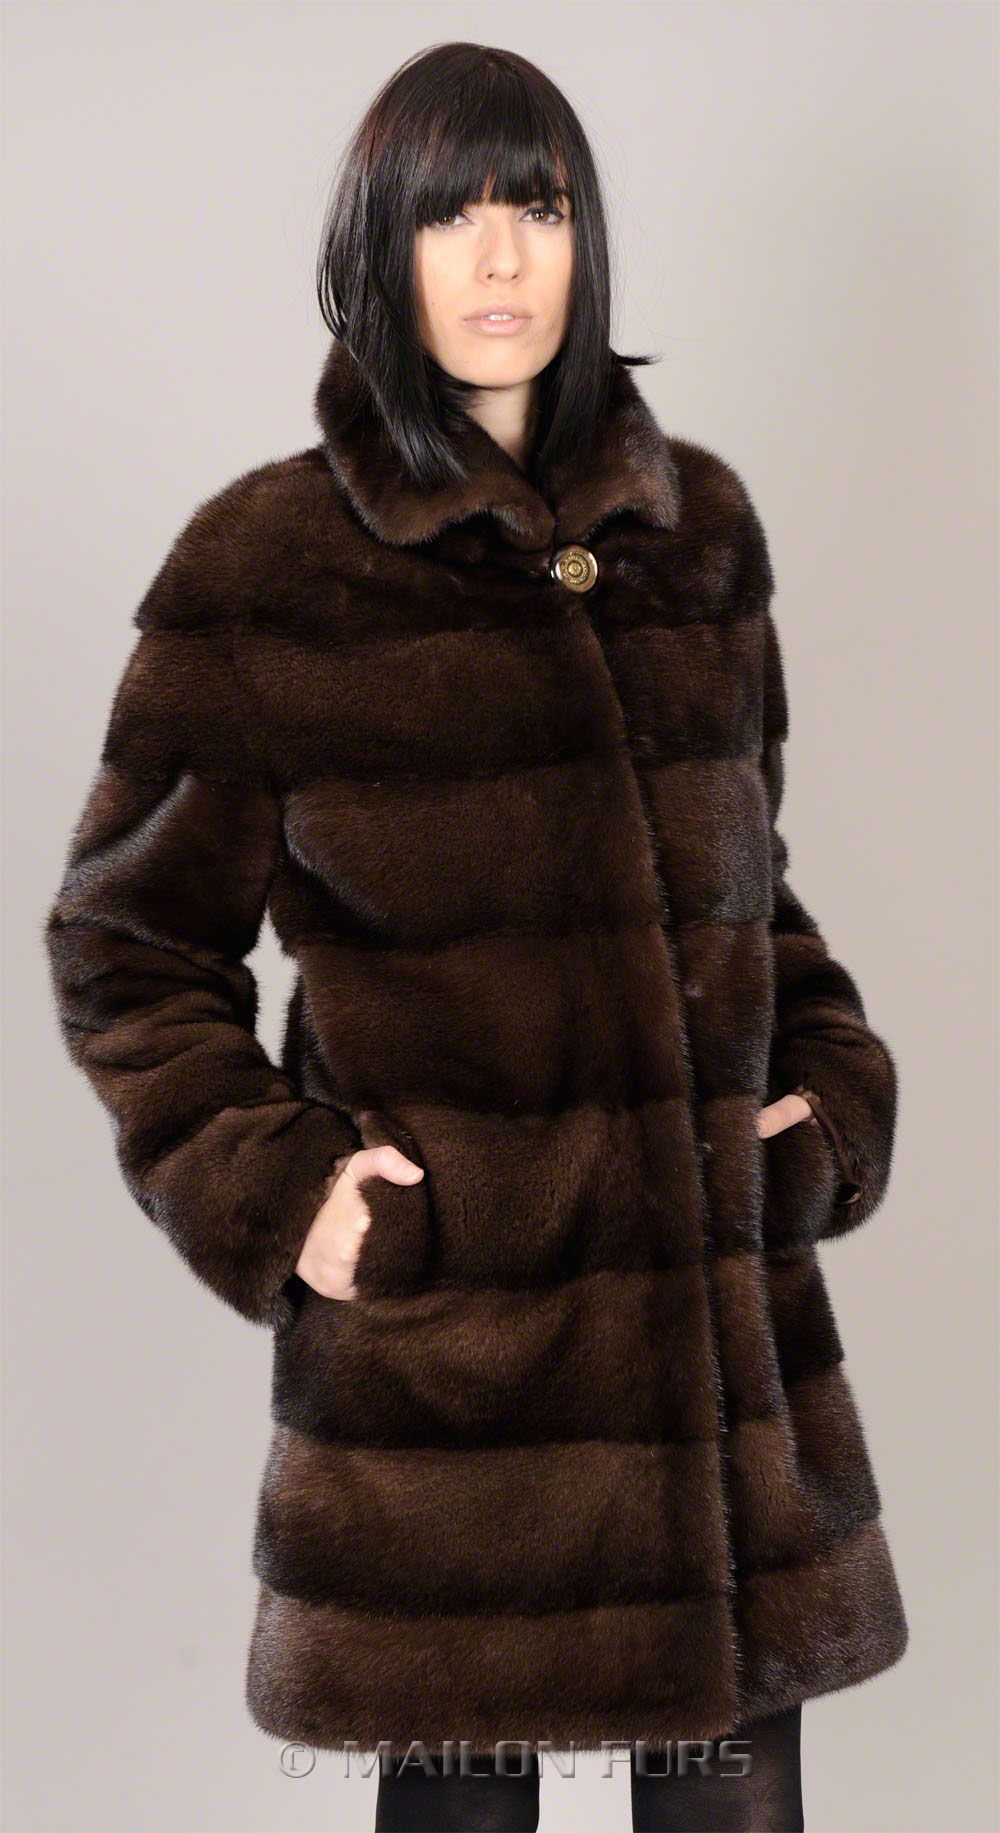 Demi Buff brown natural mink fur coat jacket   pelts across  all sizes